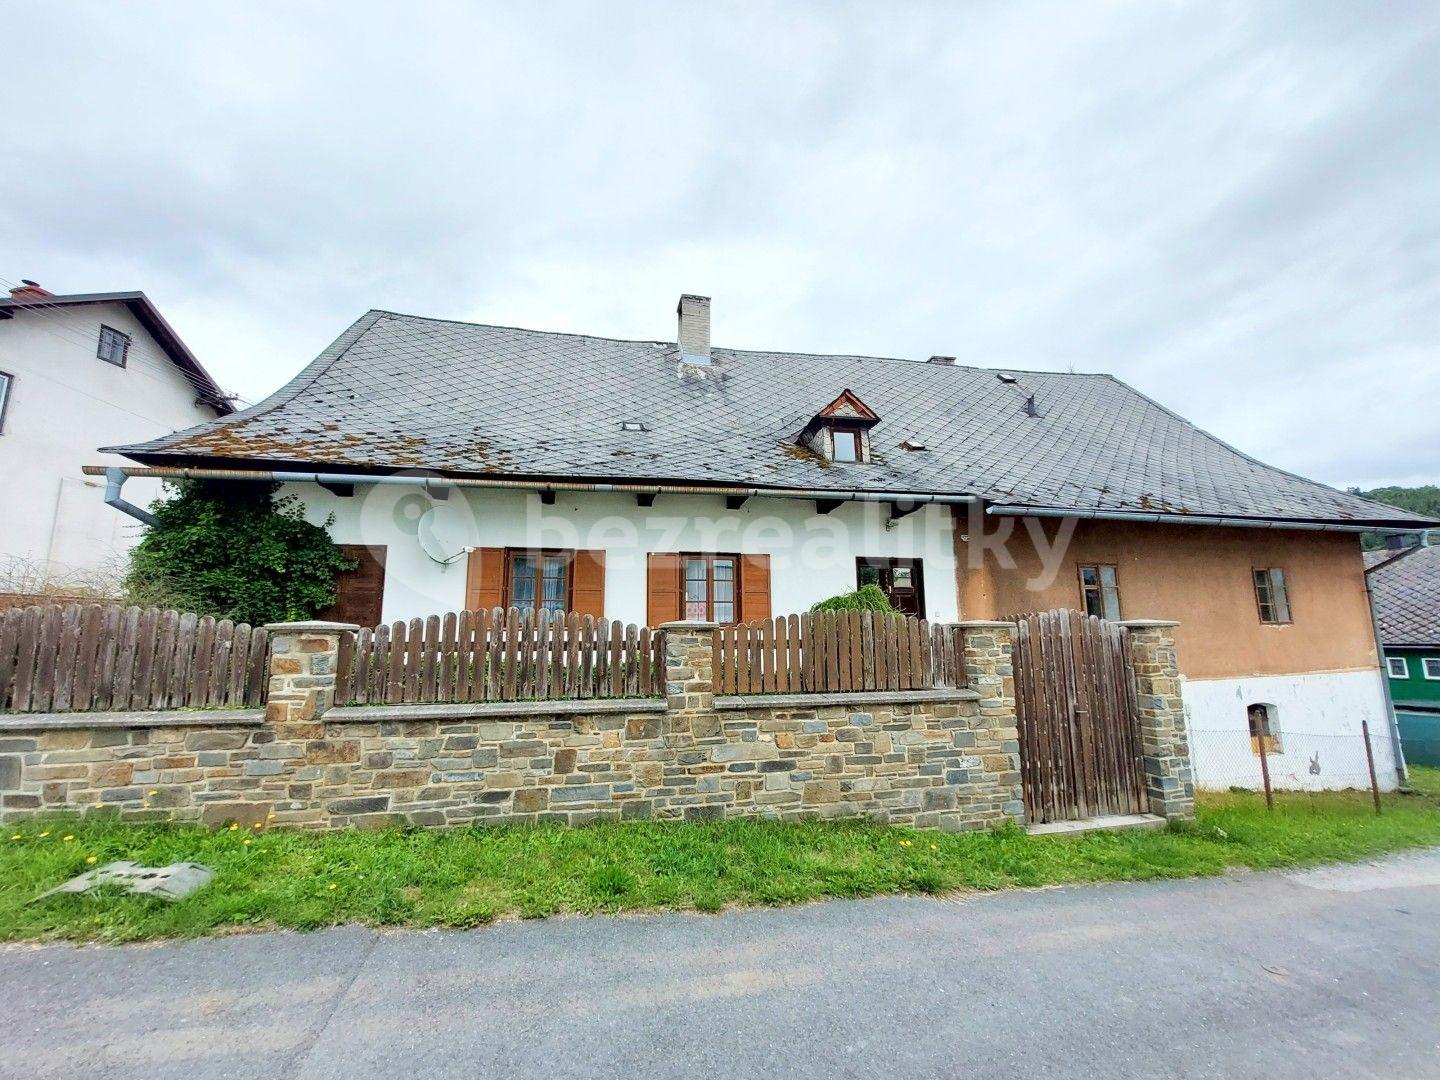 Prodej chaty, chalupy 150 m², pozemek 261 m², Branná, Olomoucký kraj